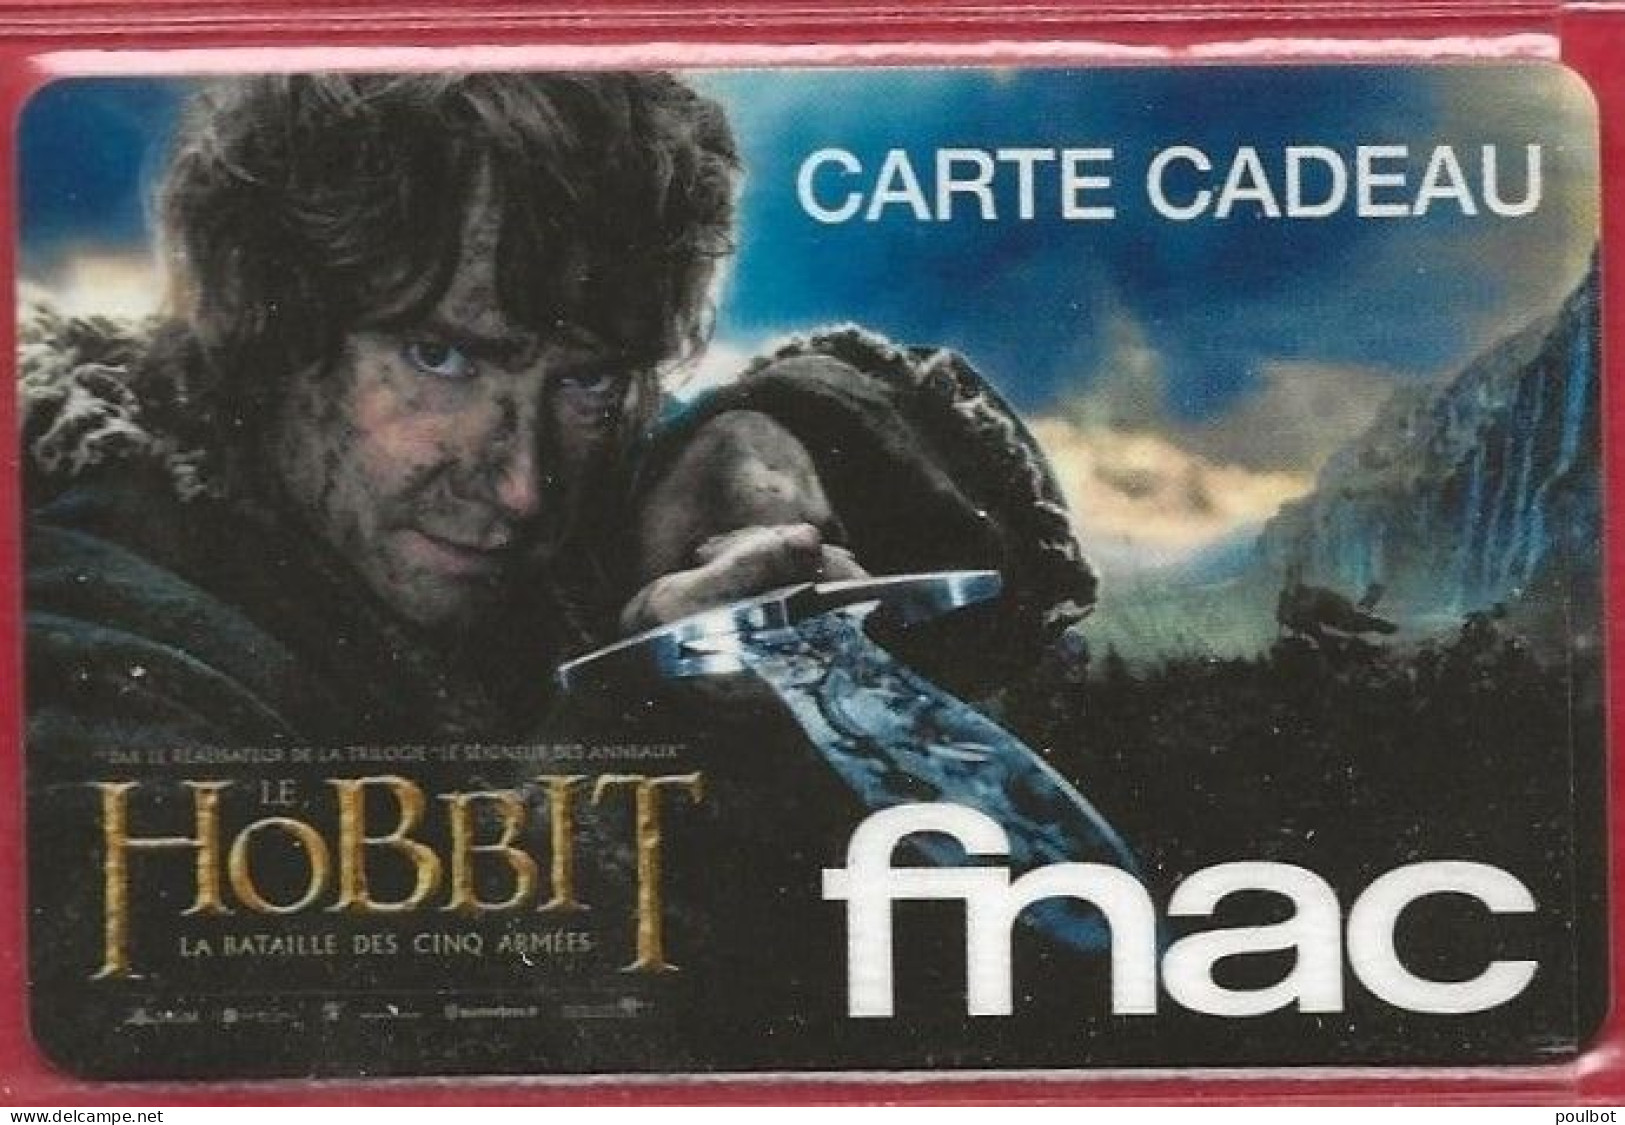 Carte Cadeau FNAC Le Hobbit - Carta Di Fedeltà E Regalo